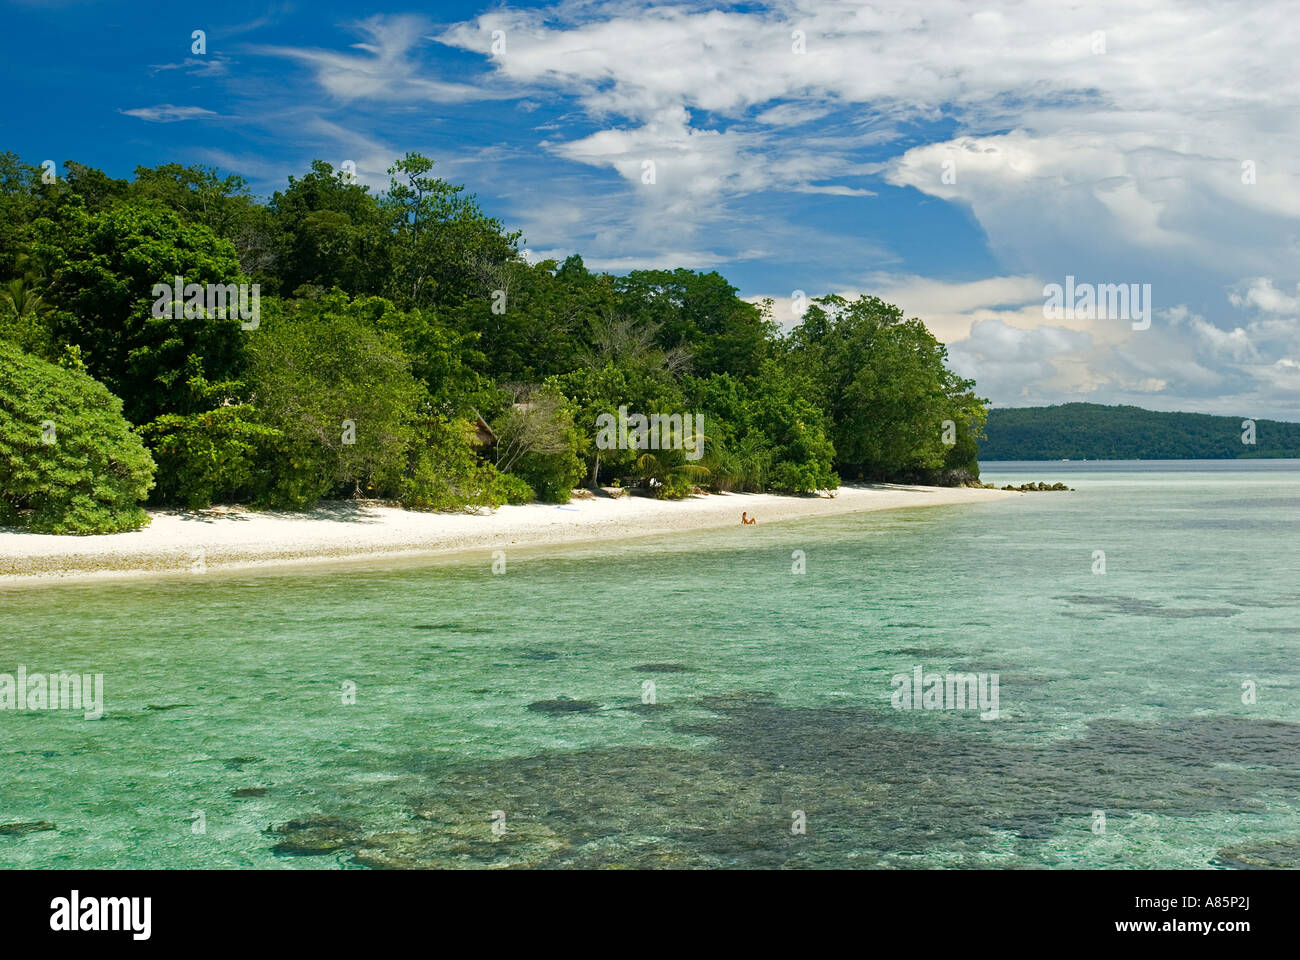 Scenic view of white sandy beach and lush green behind in Kri Island, Raja Ampat Indonesia. Stock Photo